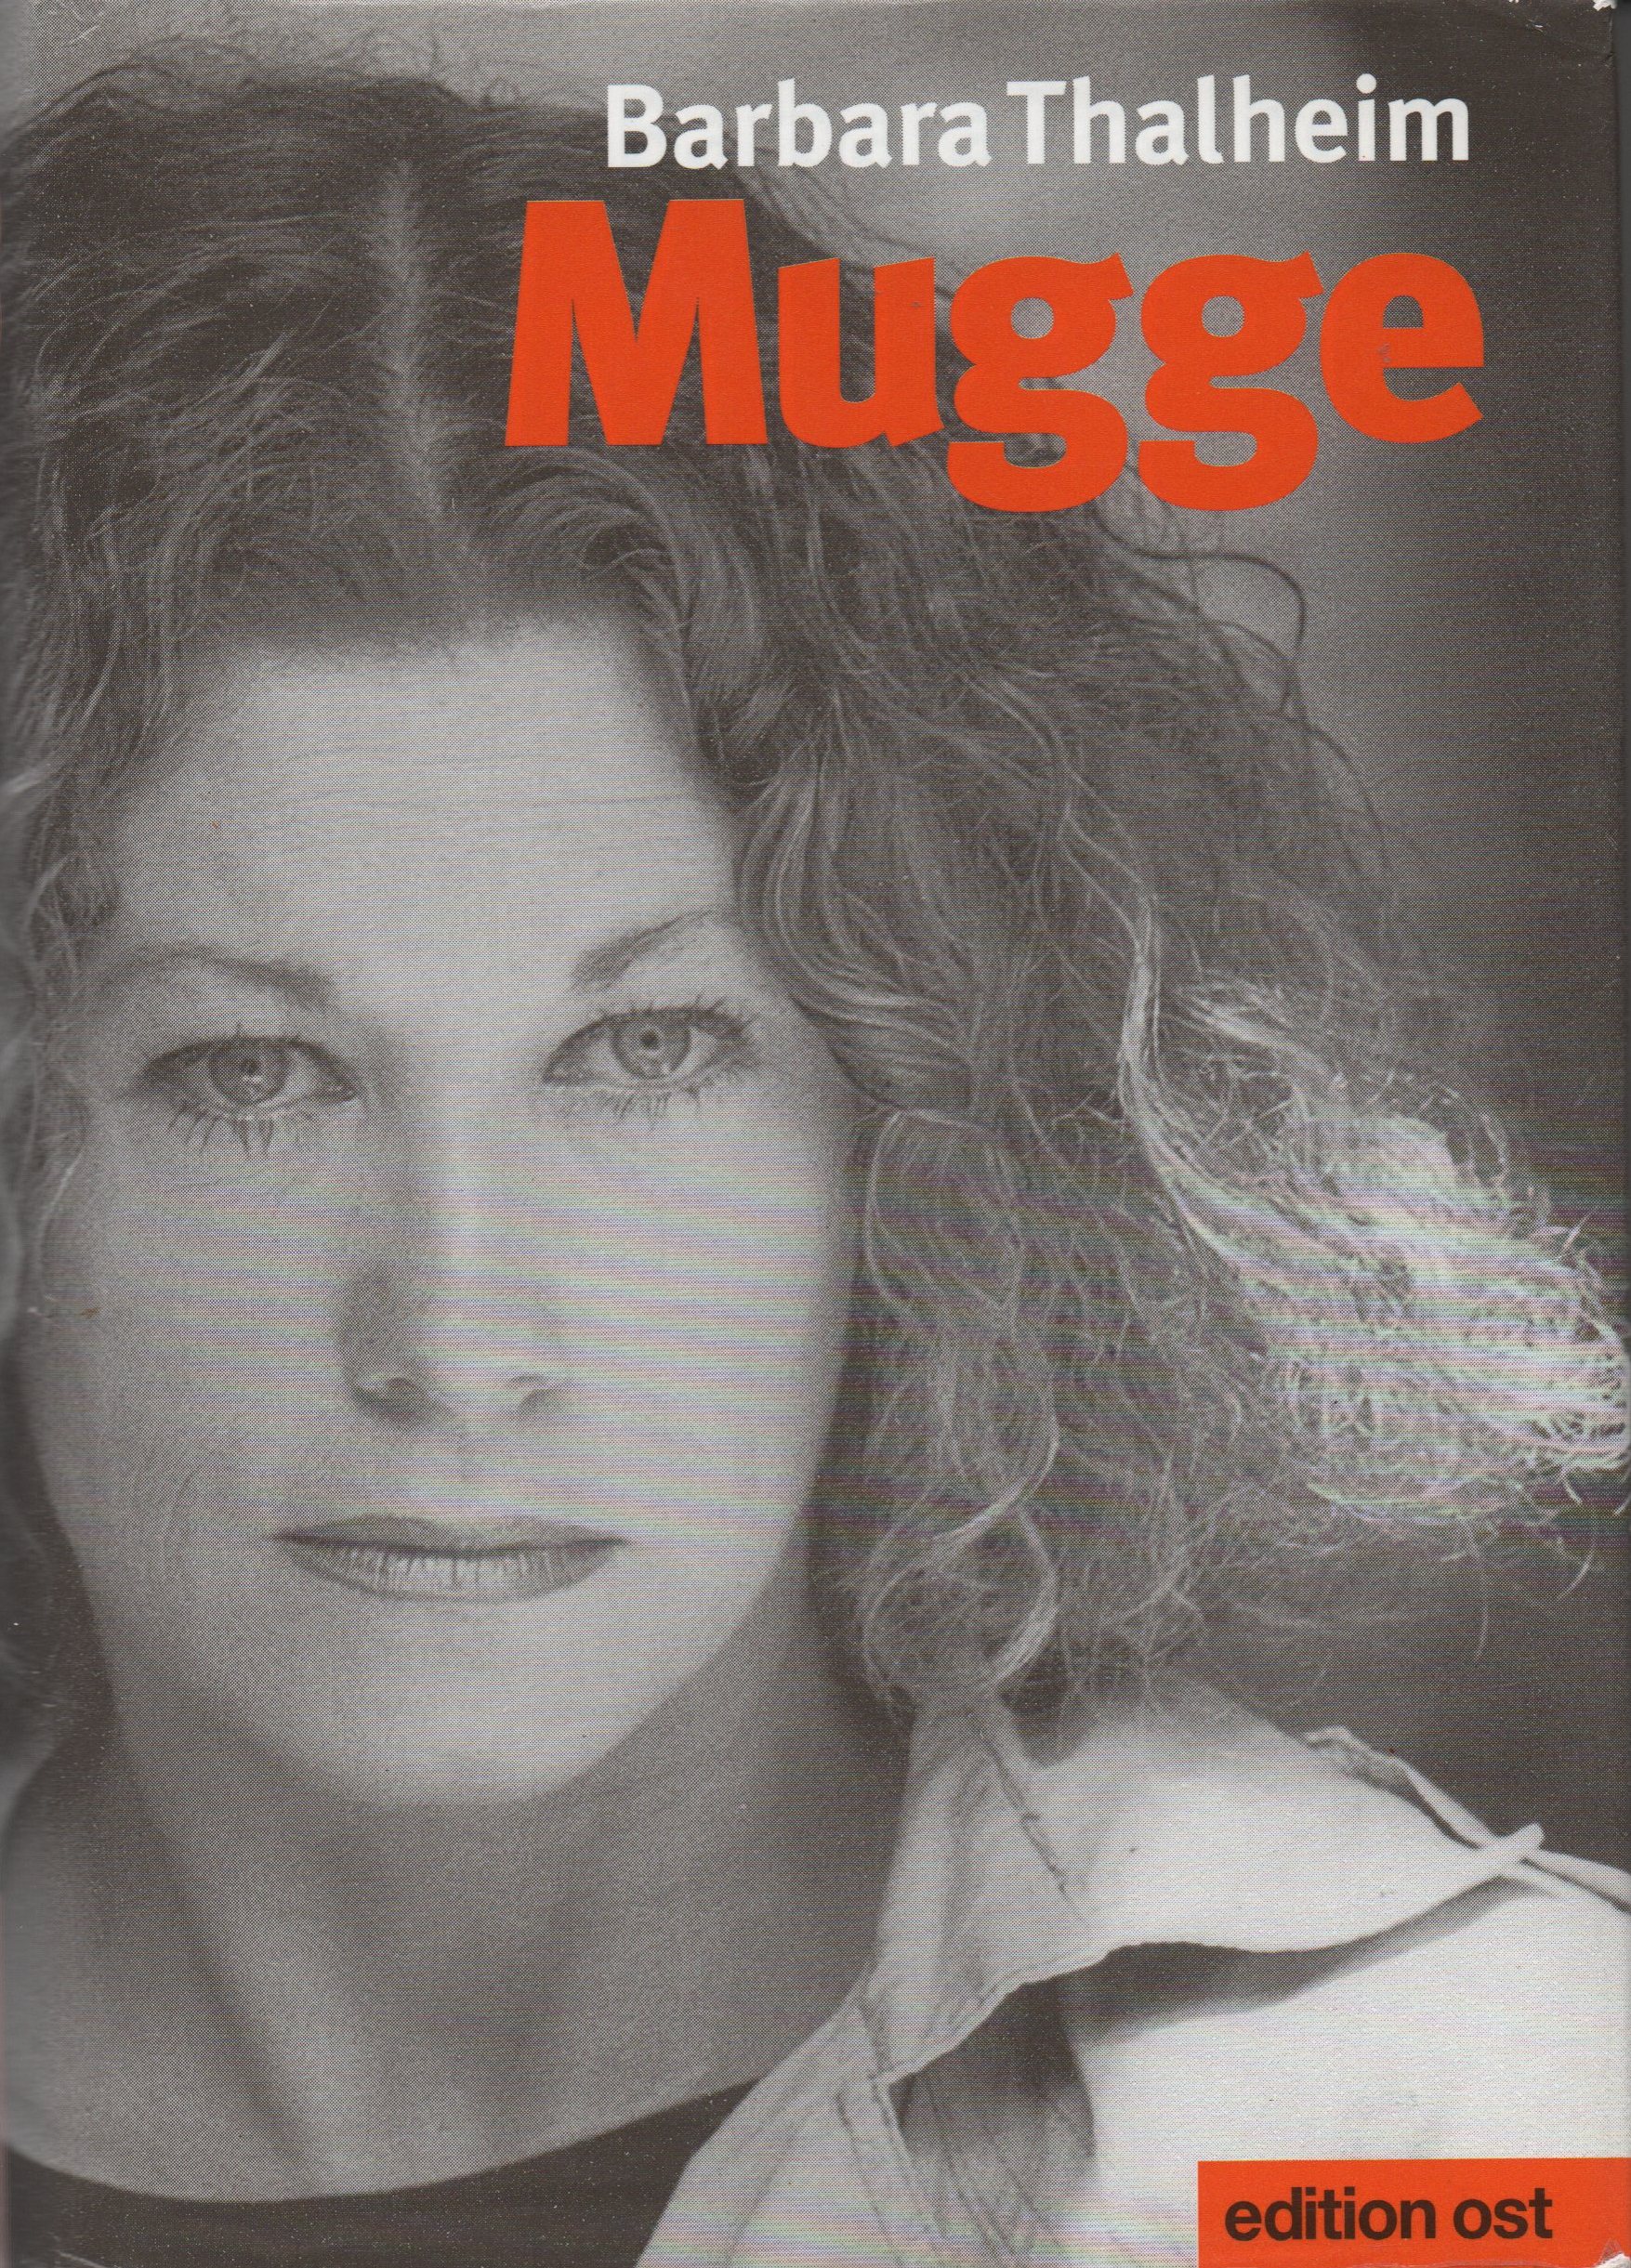 Titelseite "Mugge"